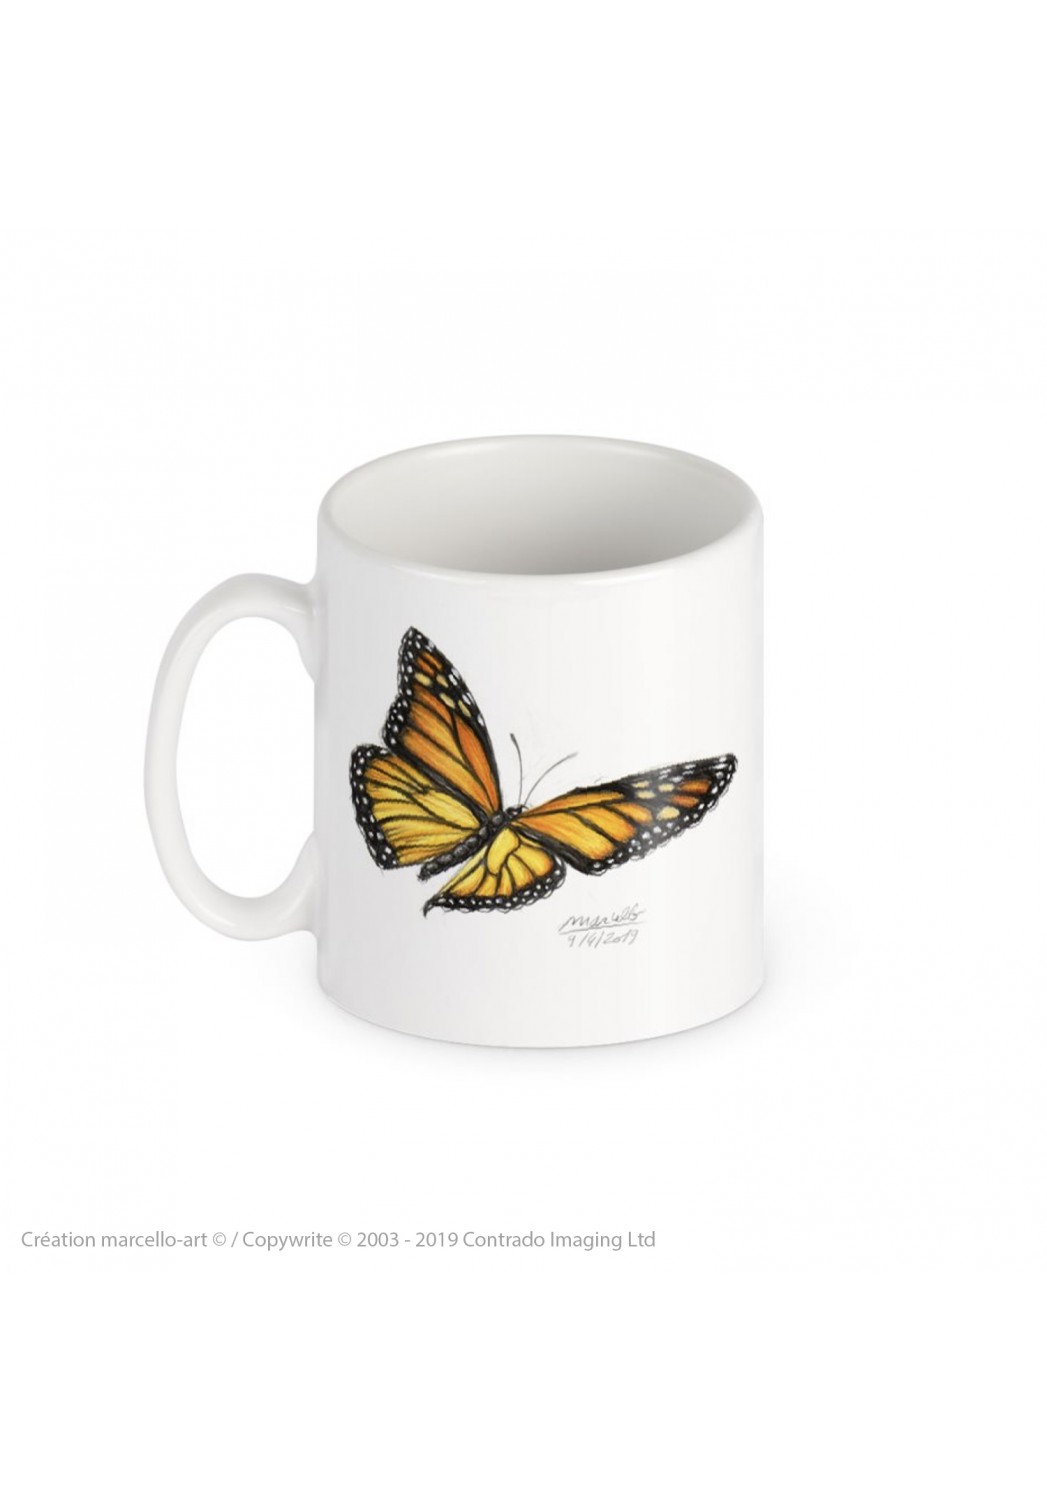 Marcello-art: Decoration accessoiries Porcelain mug 393 monarch butterfly